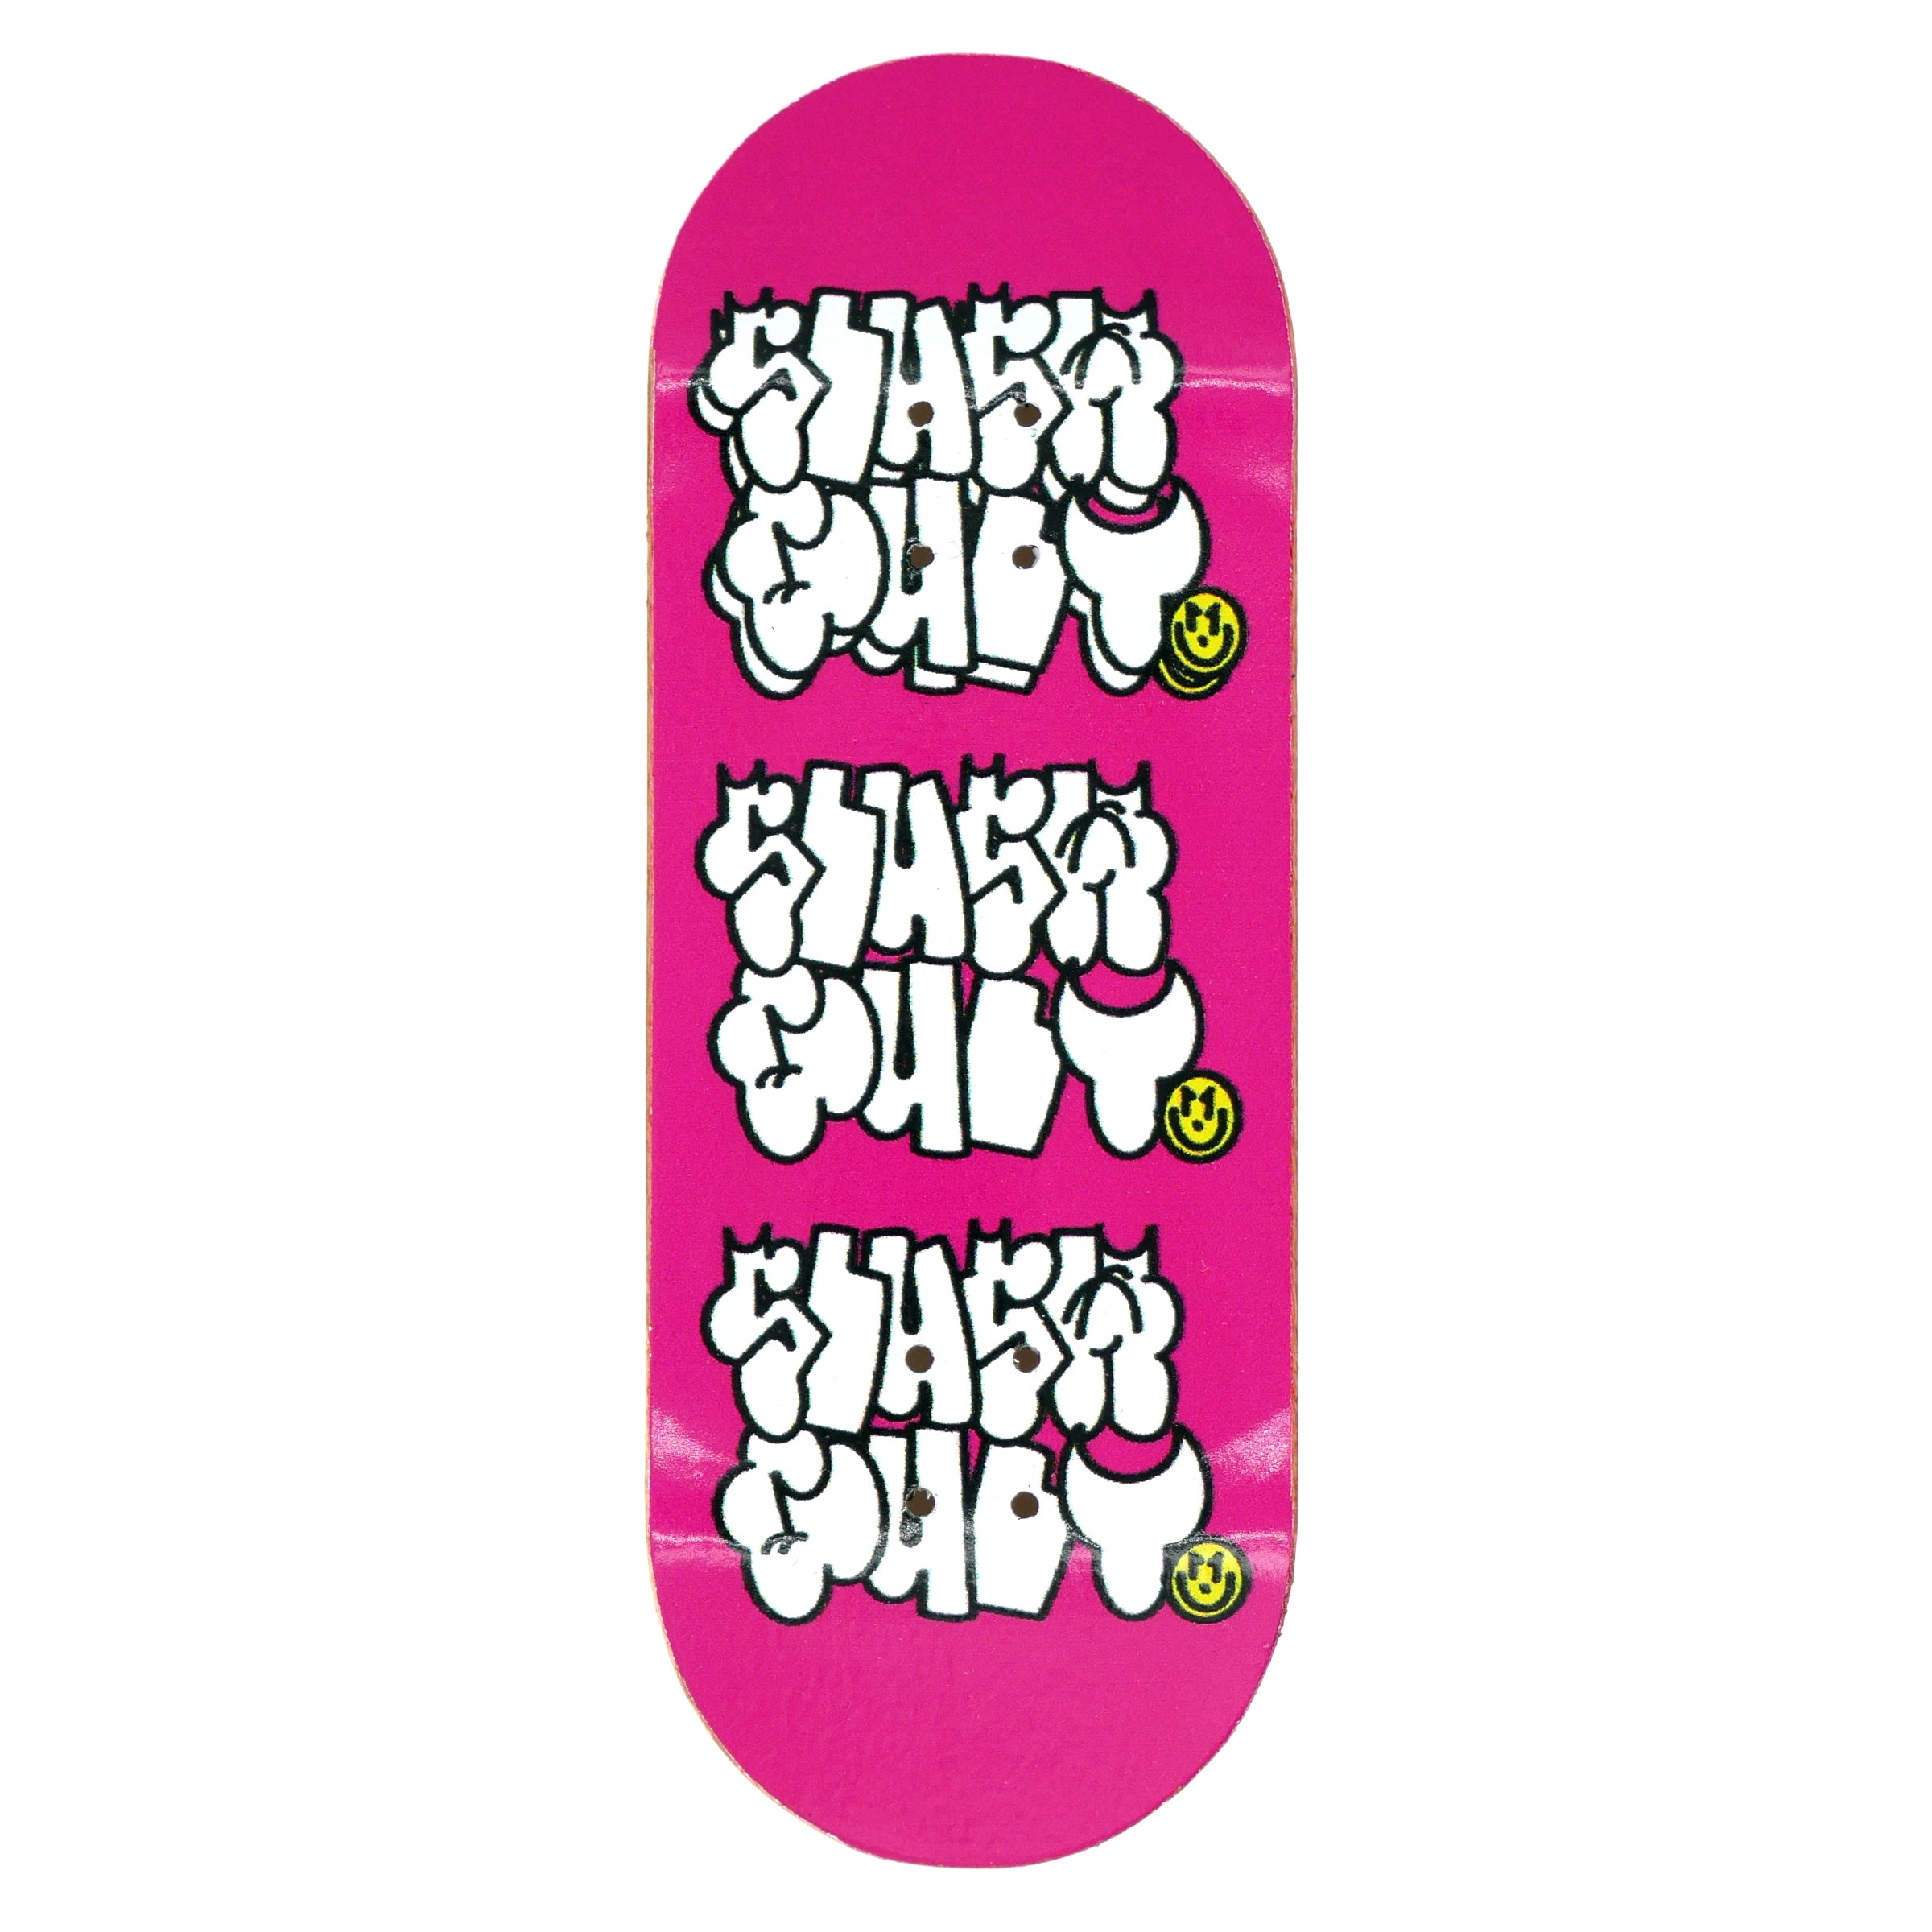 Slushcult "Pink Slappy" Pro Fingerboard Deck MINI Skate Shop Slushcult    Slushcult